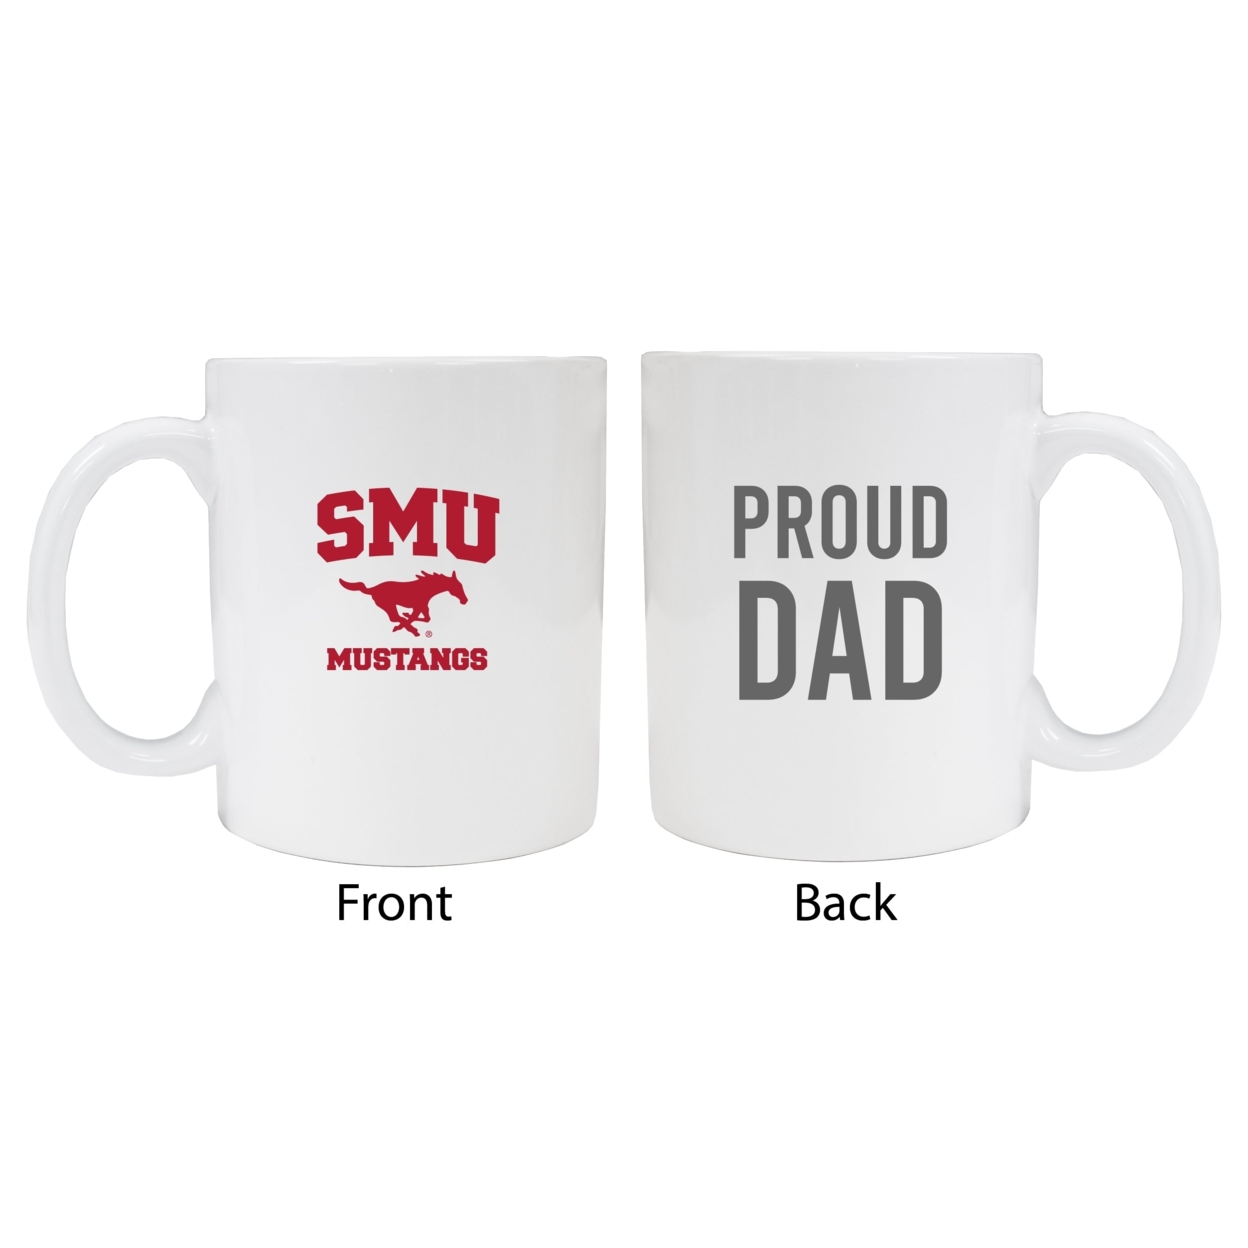 Southern Methodist University Proud Dad Ceramic Coffee Mug - White (2 Pack)